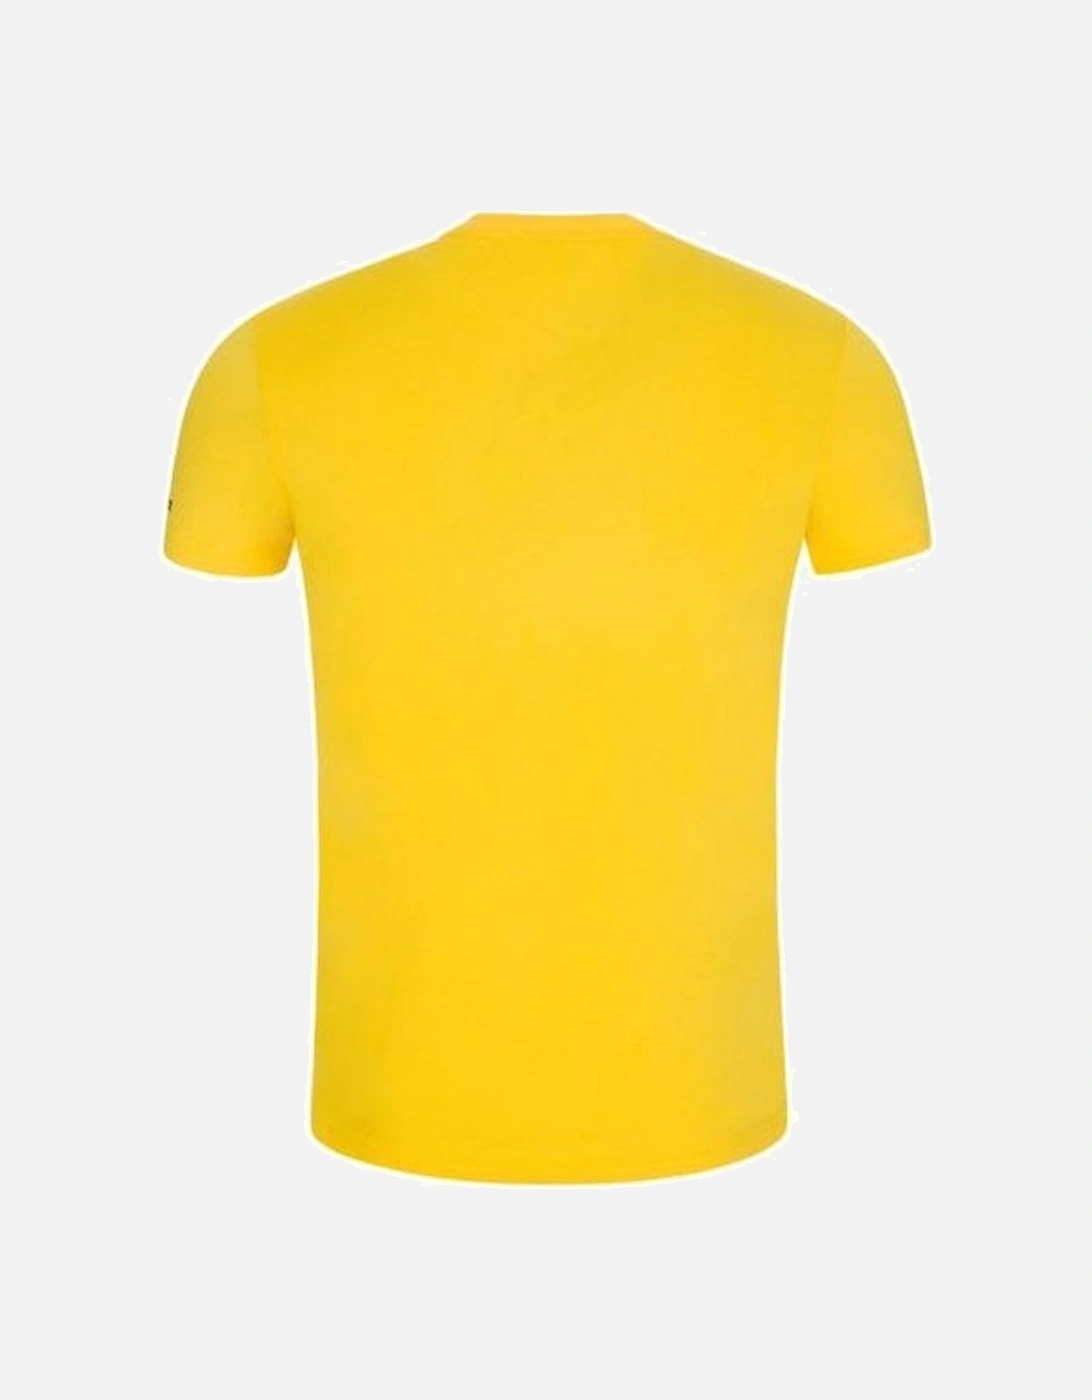 Underwear Basic Yellow T-Shirt